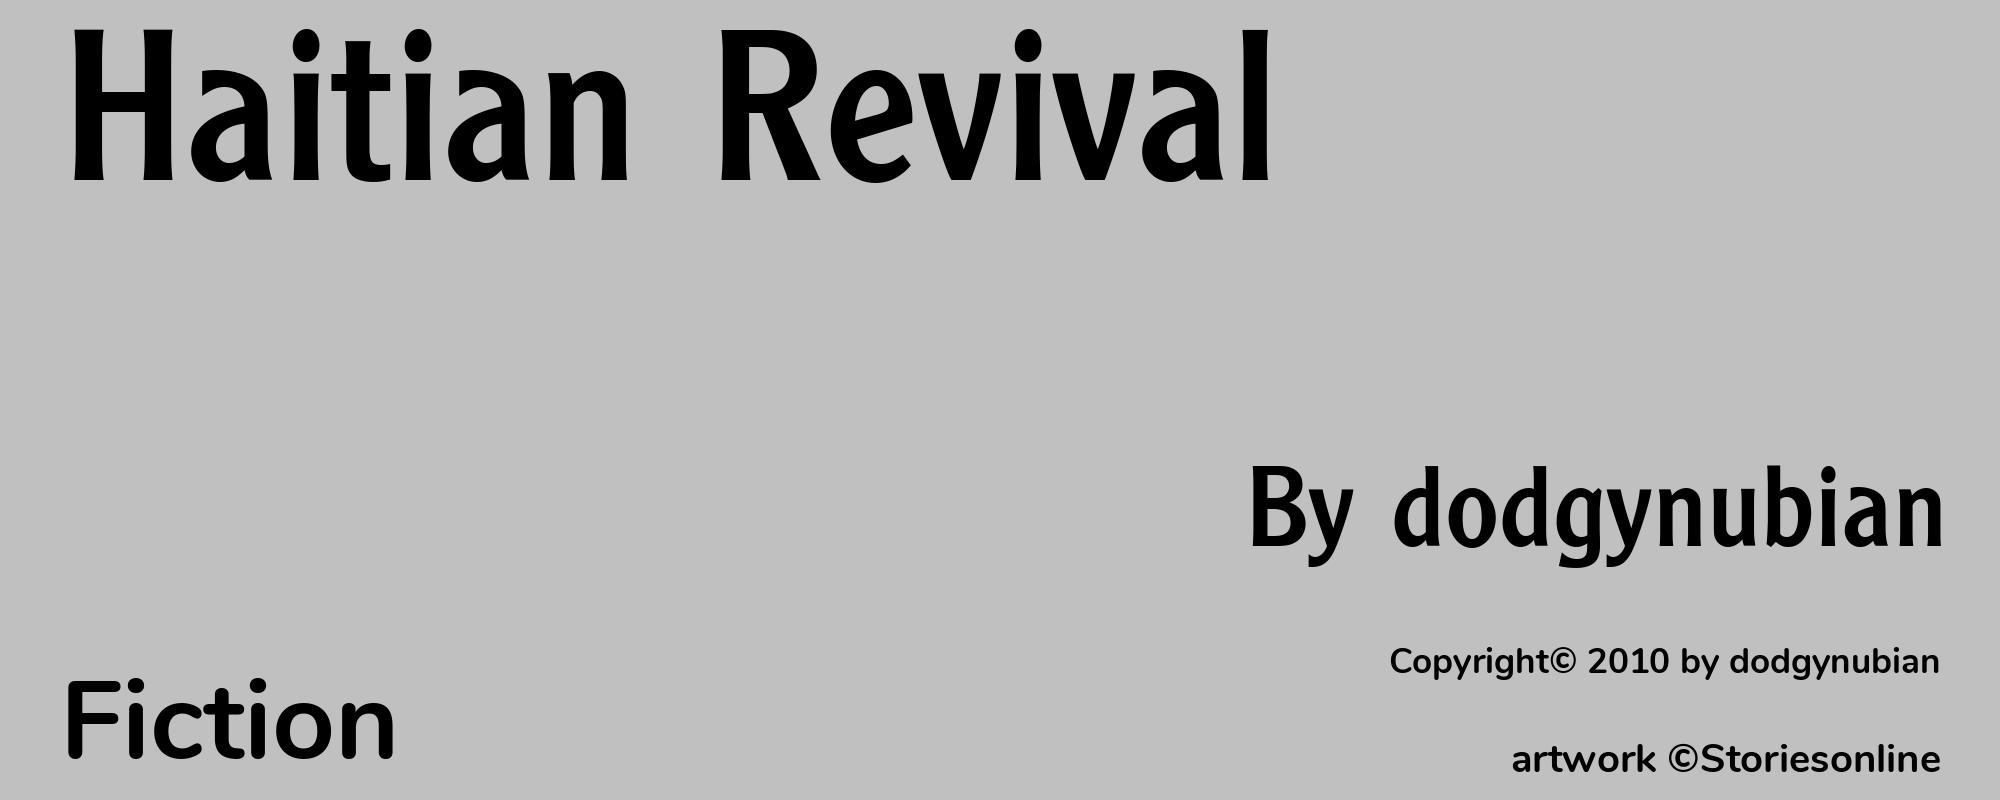 Haitian Revival - Cover